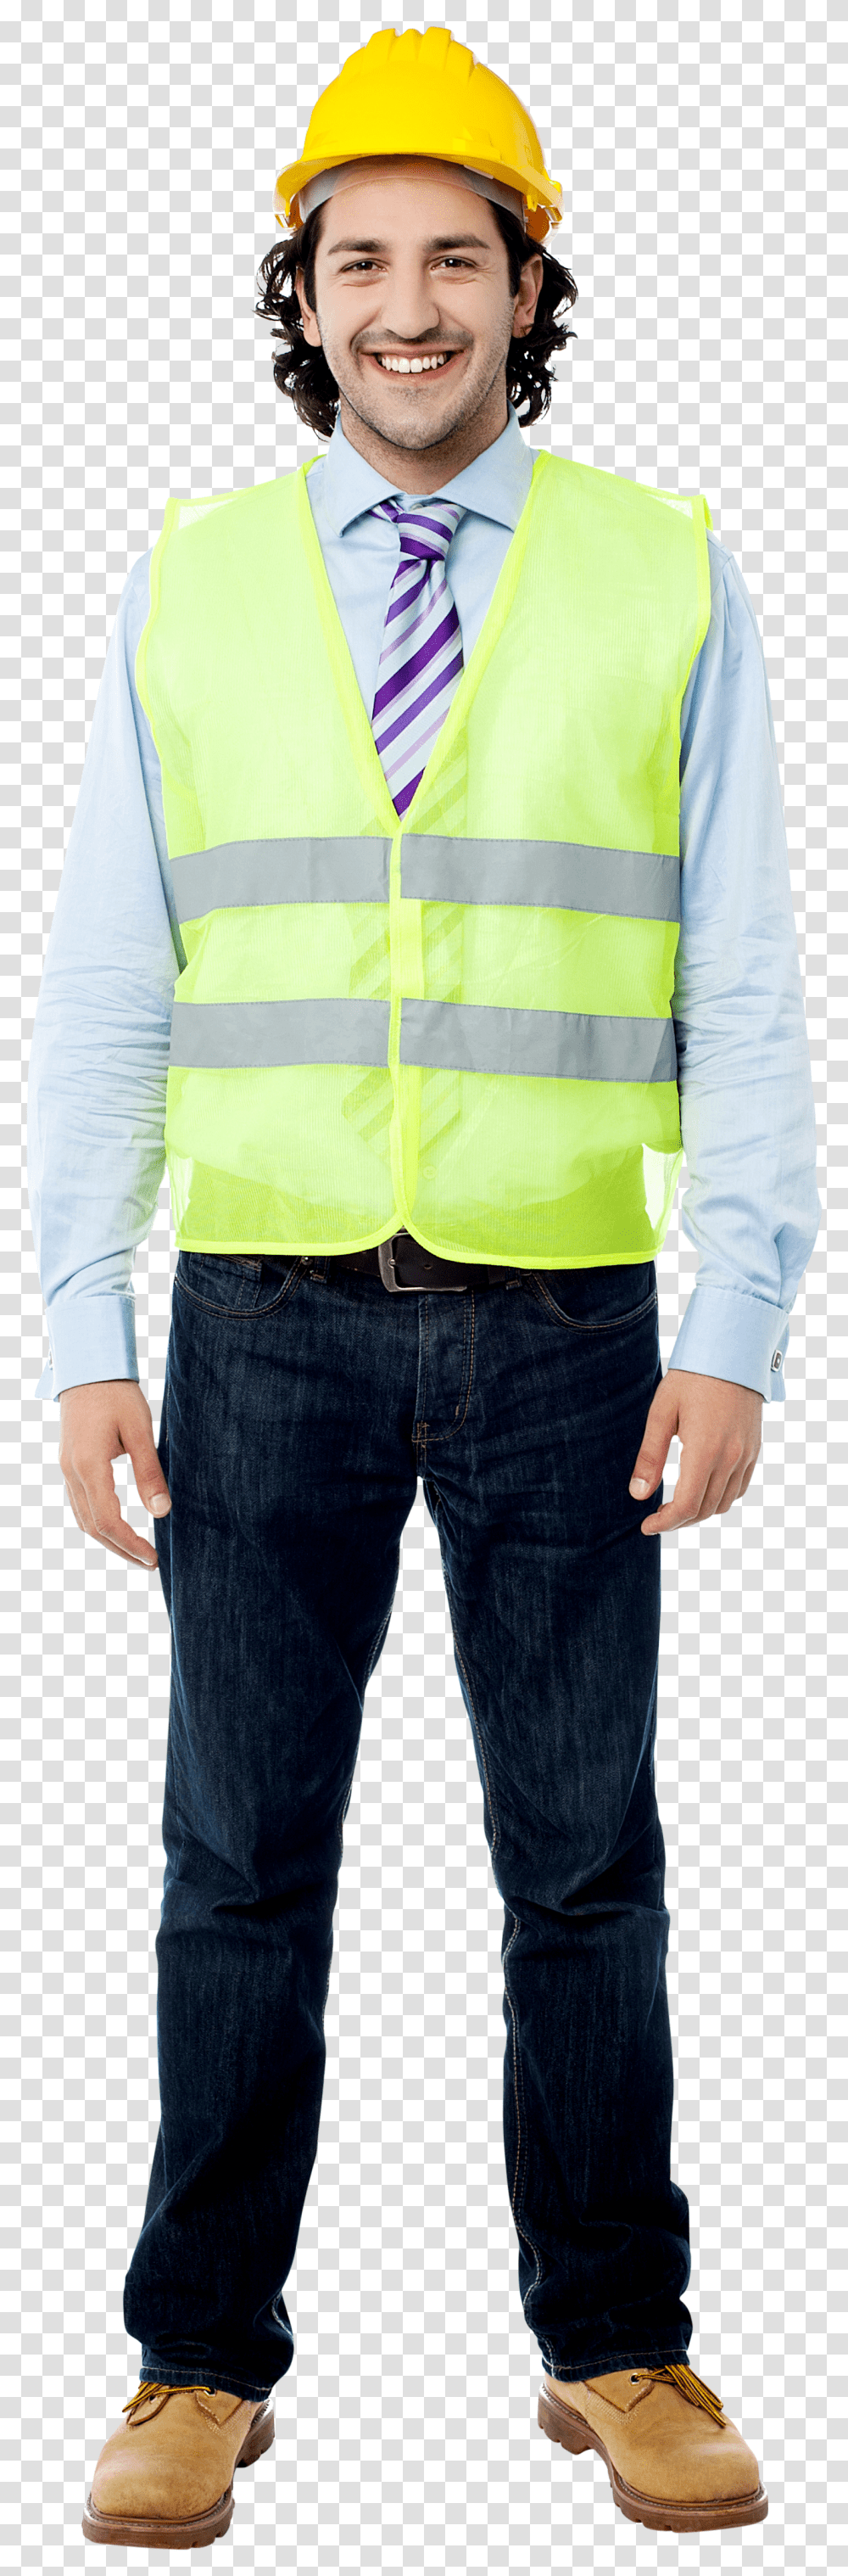 Engineer Image Civil Engineering Civil Engineer Costume Transparent Png